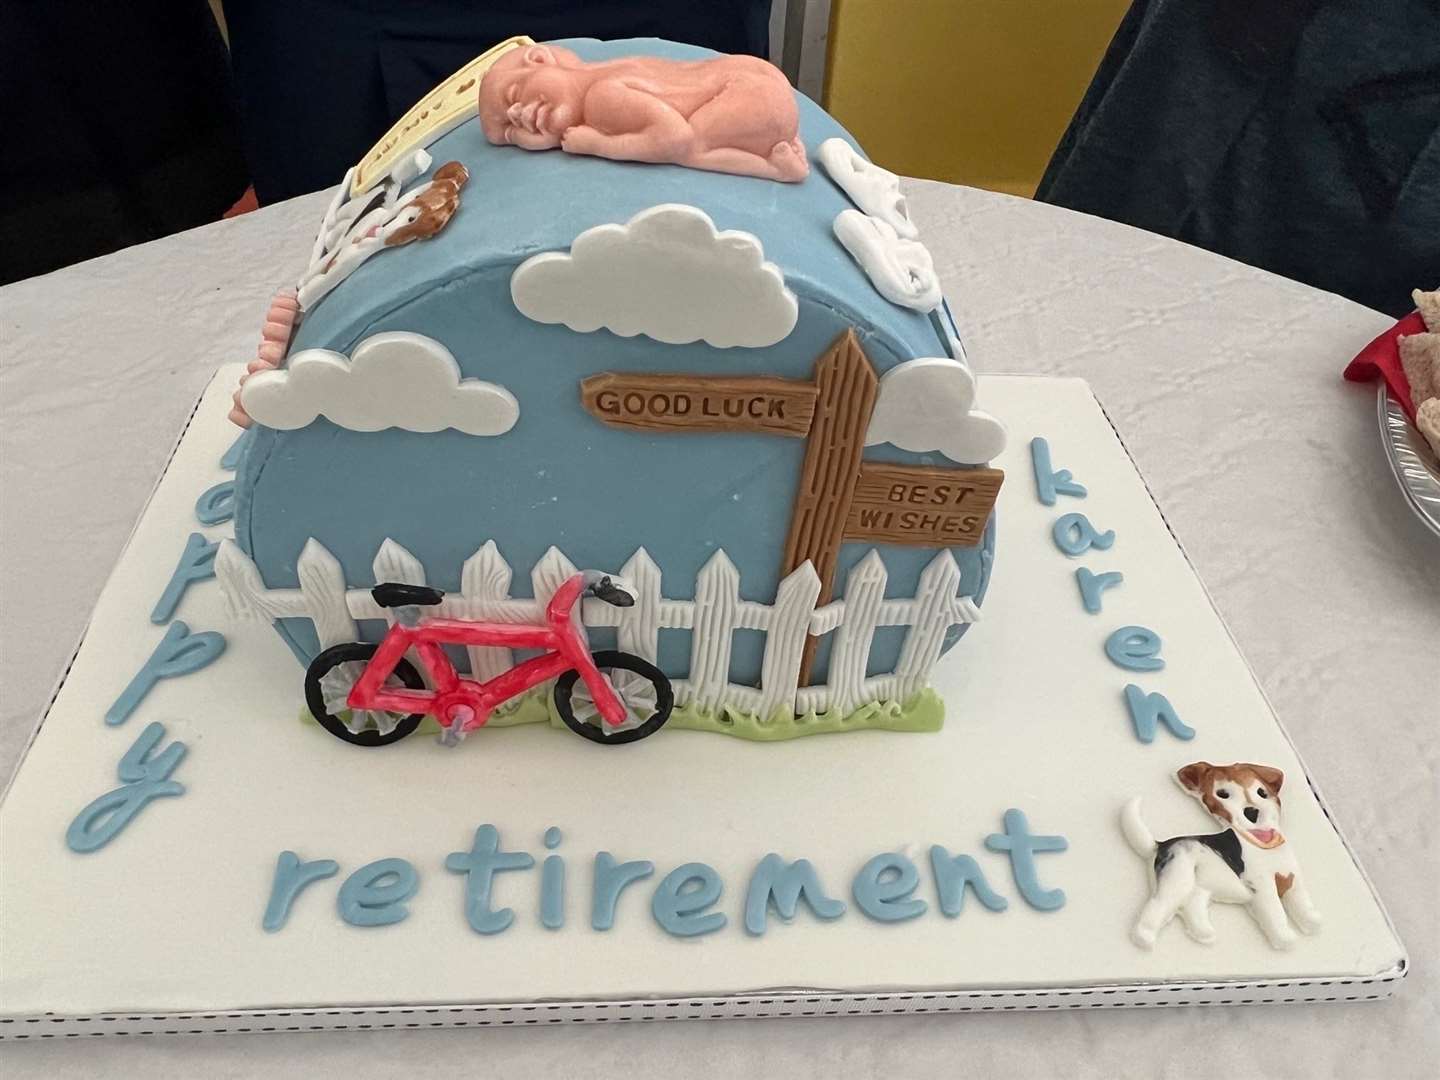 Karen Youens' retirement cake